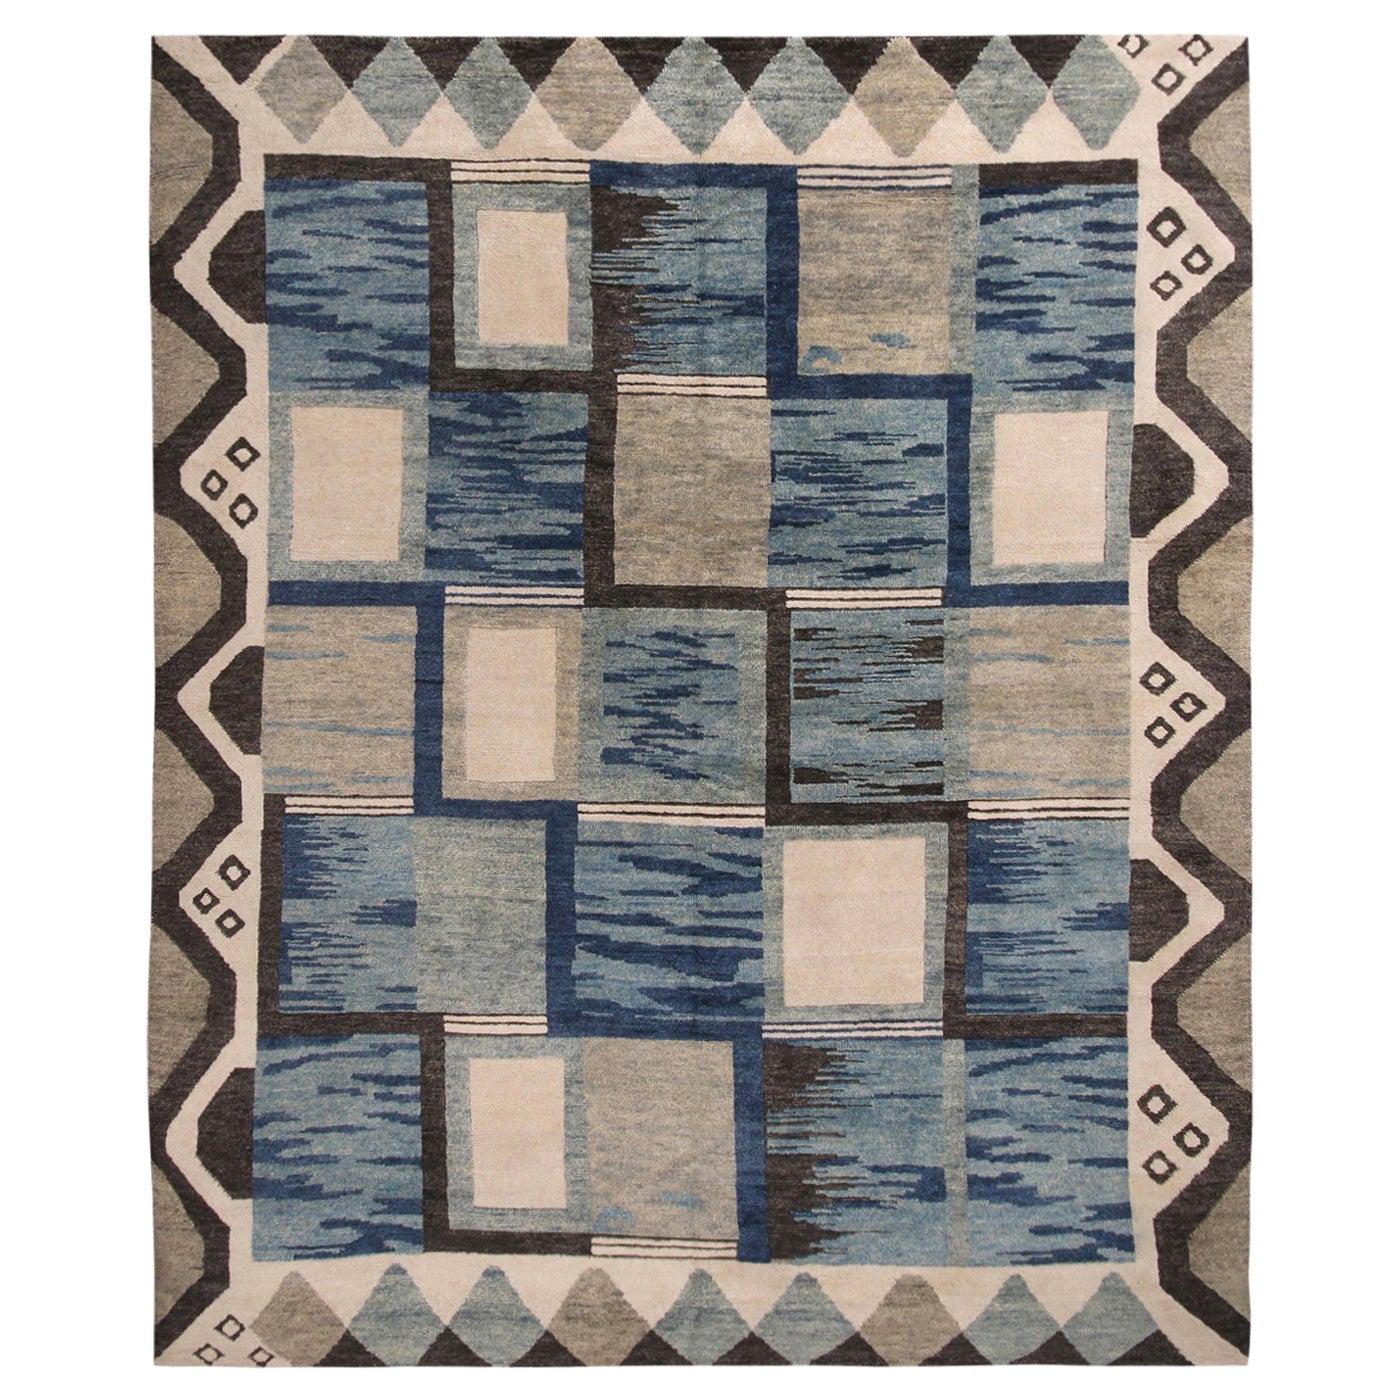 Rug & Kilim’s Scandinavian-Inspired Geometric Gray and Blue Wool Pile Rug